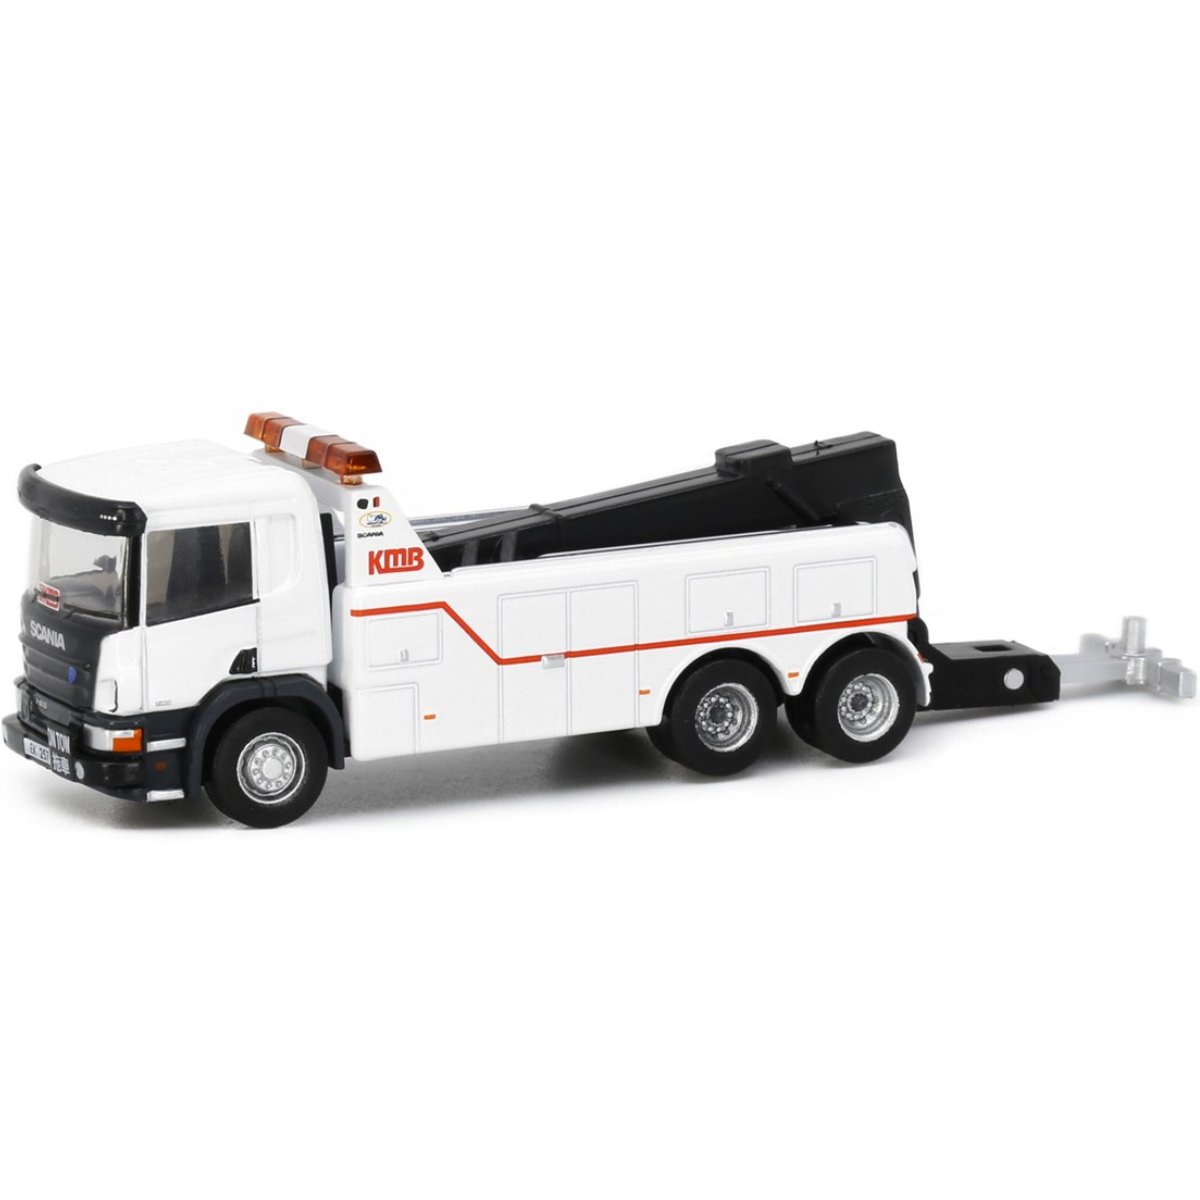 Tiny Models Scania KMB Tow Truck EK257 (1:110 Scale) - Phillips Hobbies